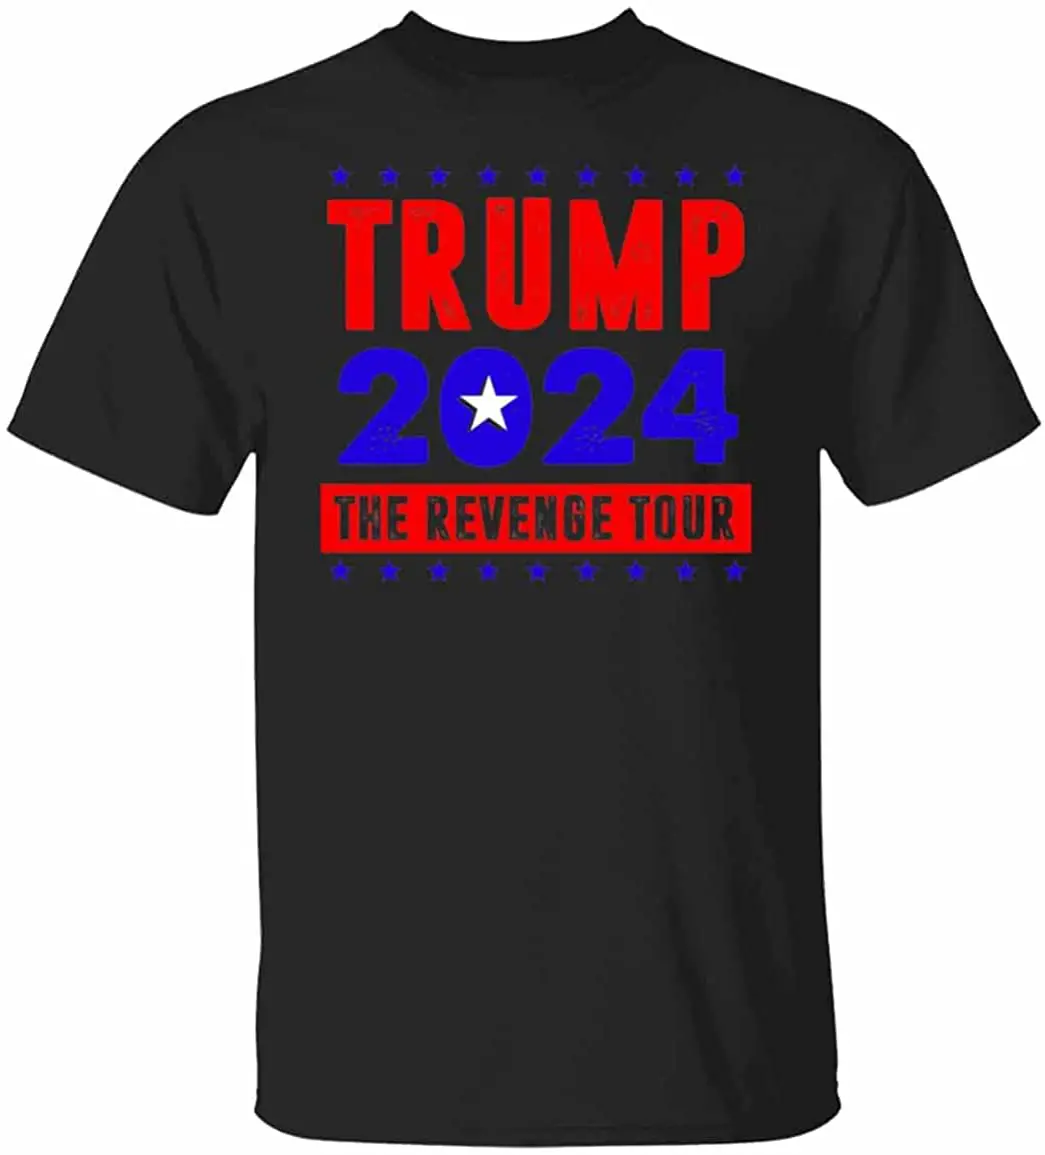 Amazon.com: Pro Trump TShirtss Trump 2024 The Revenge Tour ...